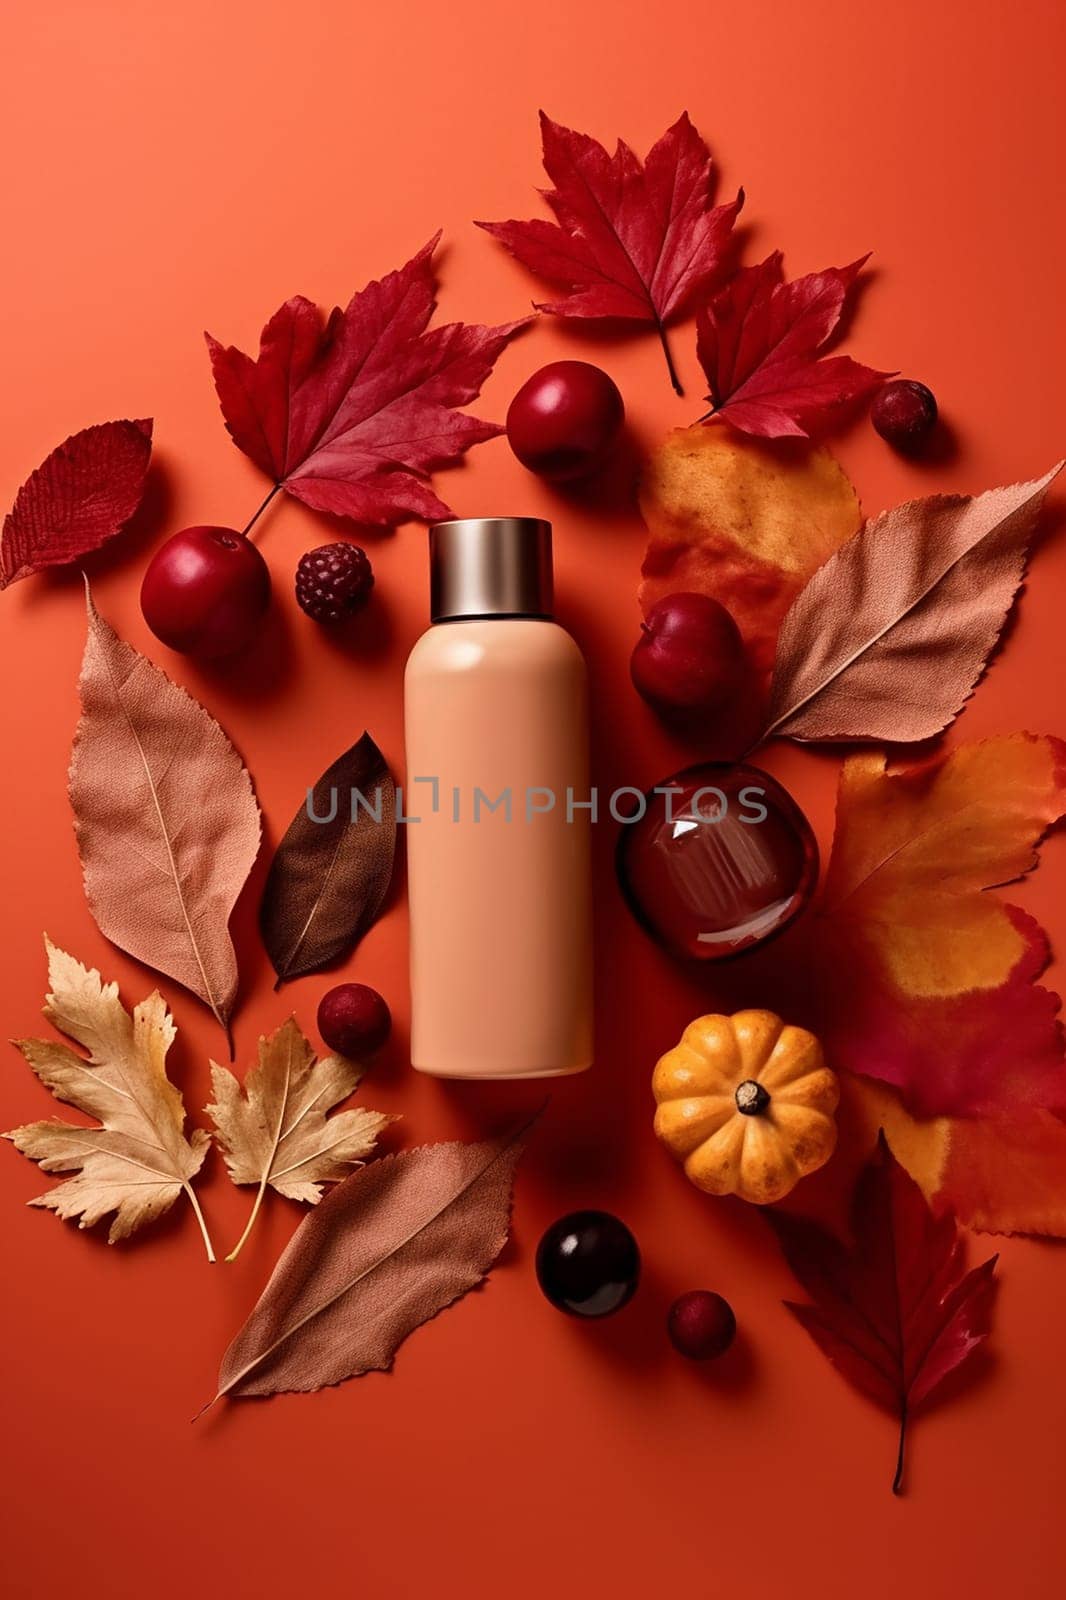 Cosmetic bottle surrounded by autumn leaves and seasonal decor on orange backdrop.